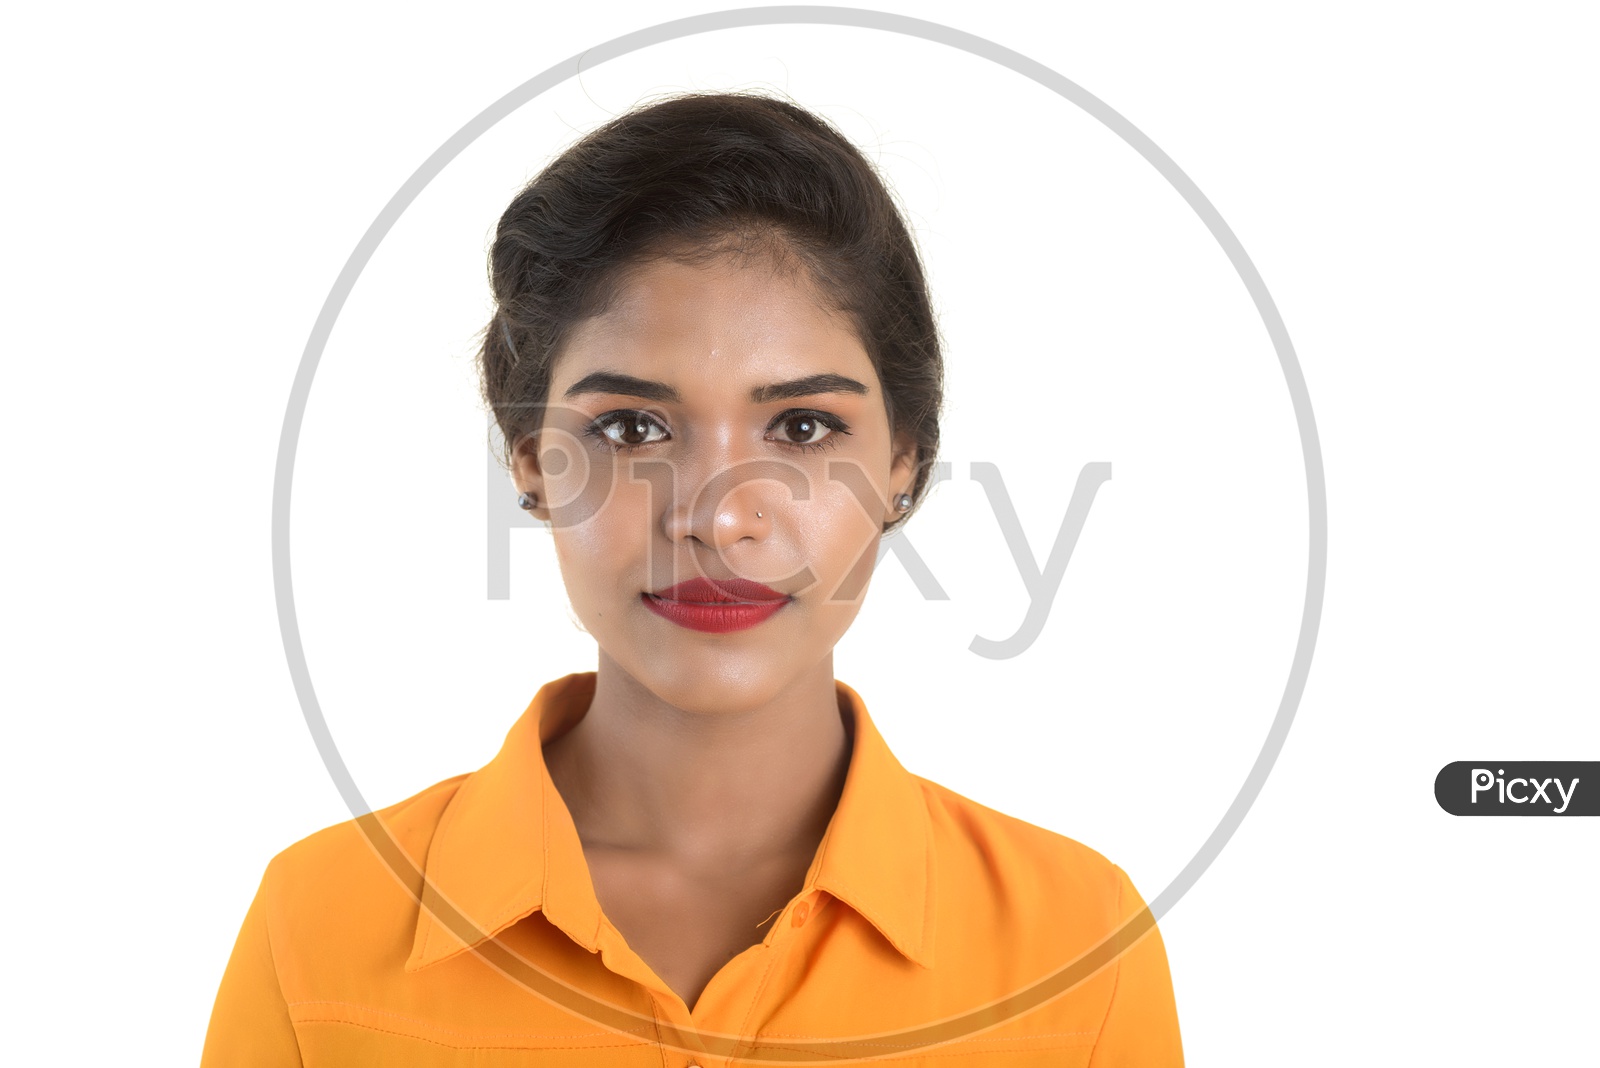 Portrait of beautiful Indian woman wearing makeup with orange shirt